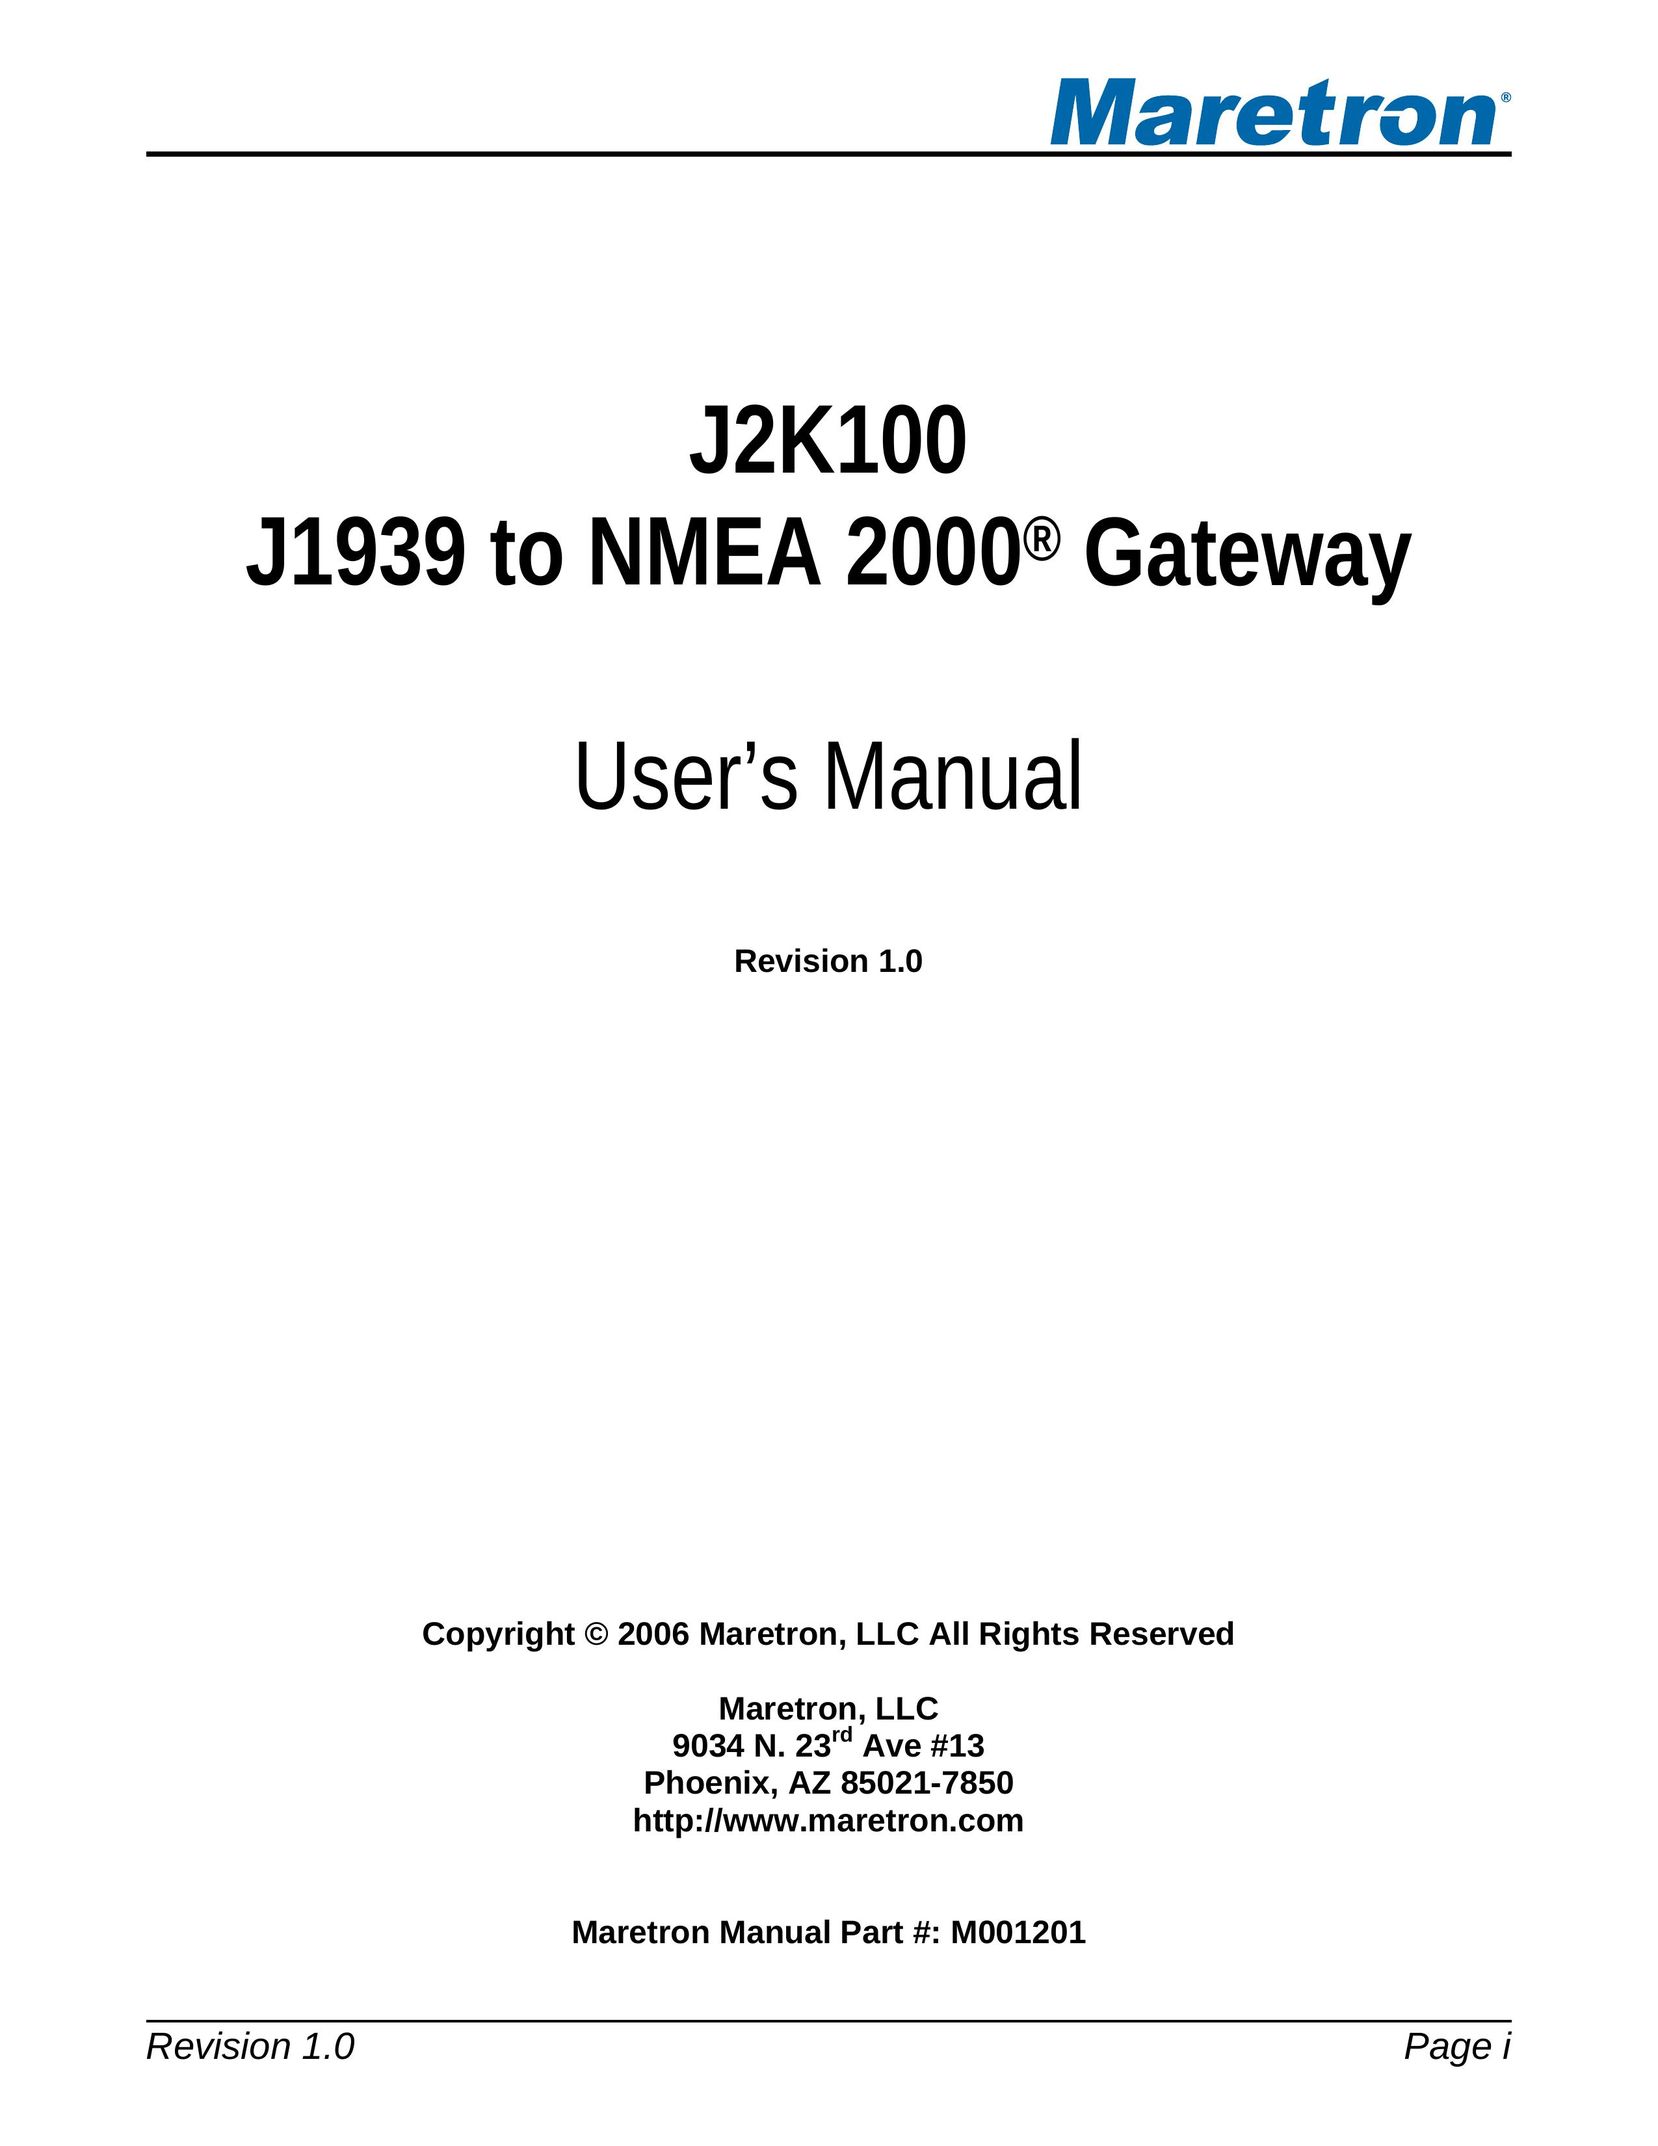 Maretron J2K100 Network Router User Manual